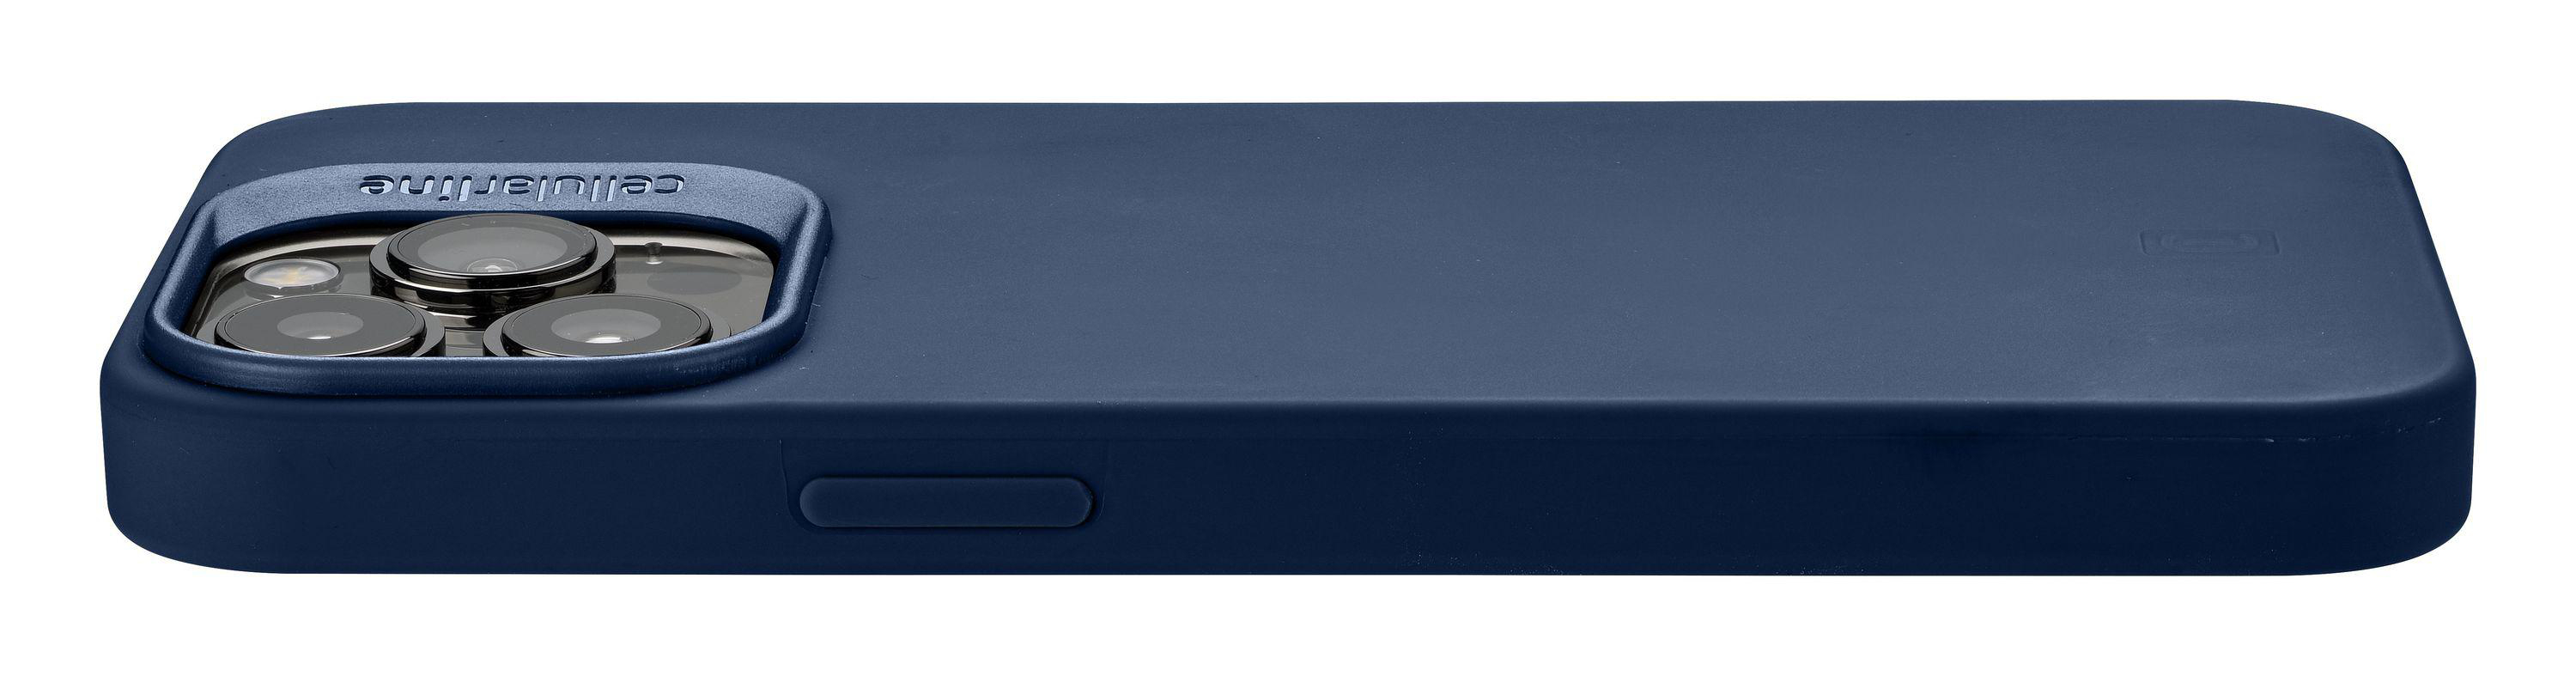 CELLULAR LINE Backcover, iPhone PRO, Apple, Blue Sensation, 14